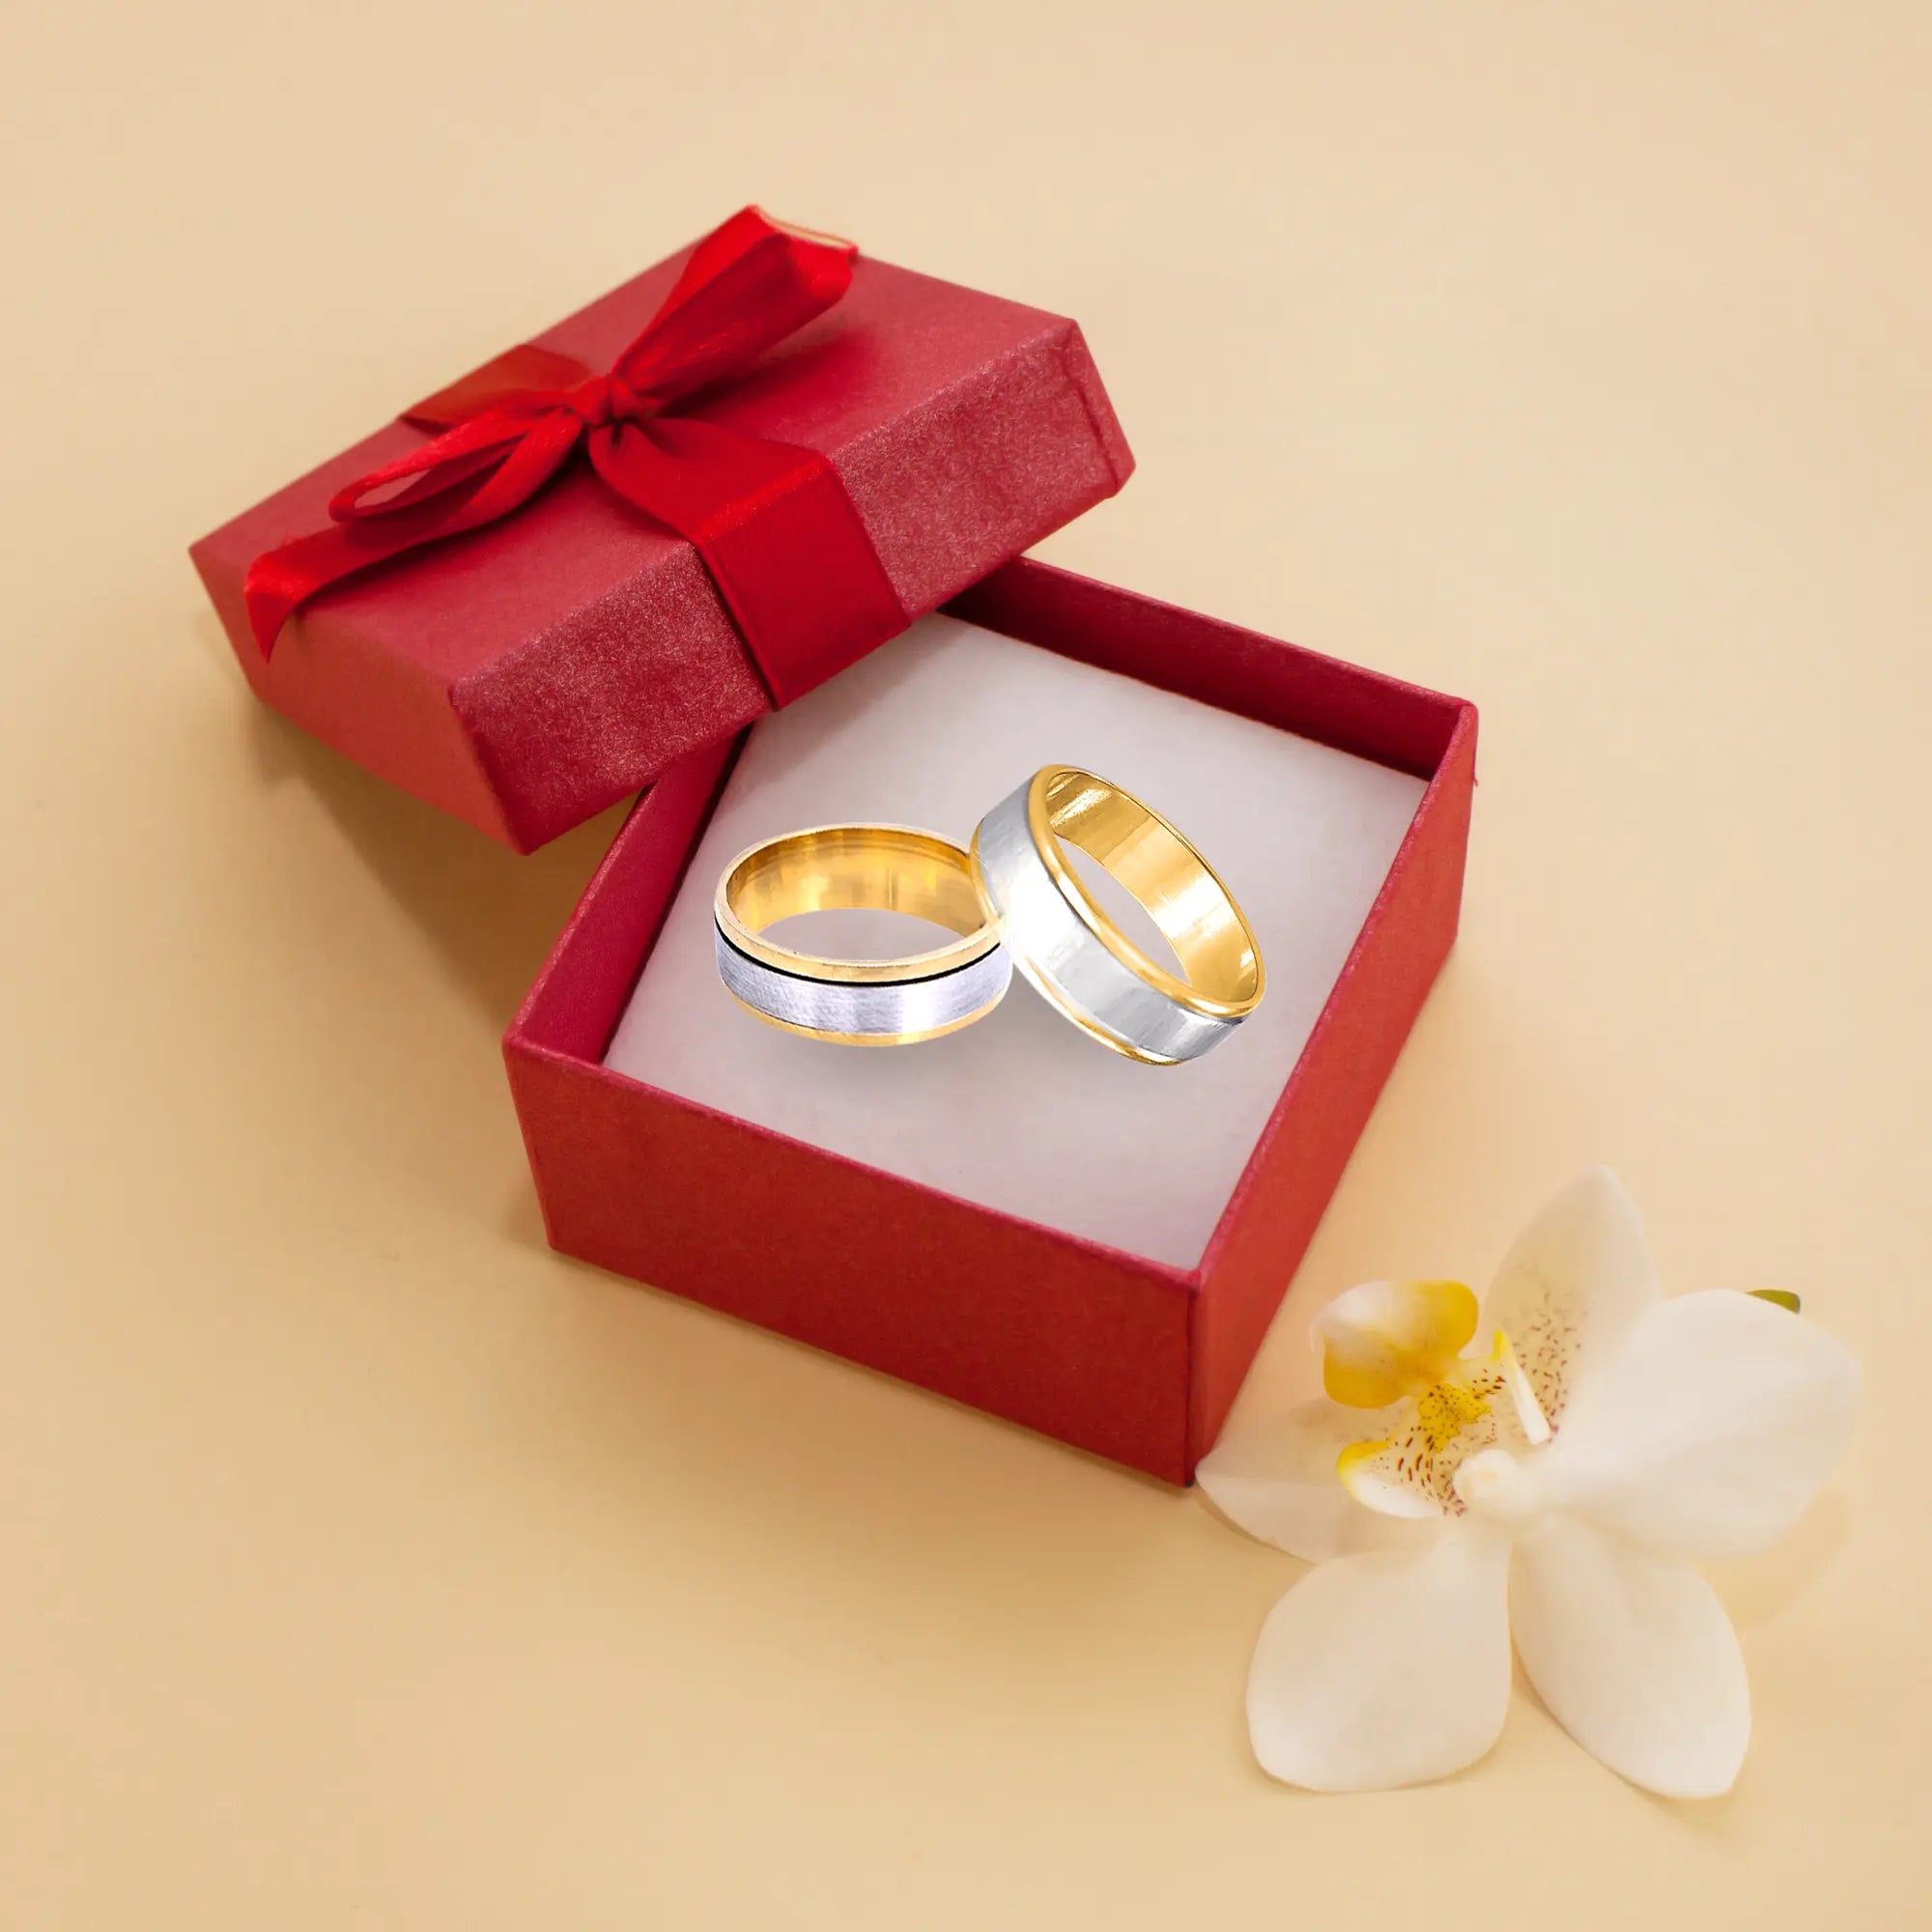 Band ring, wedding jewelry